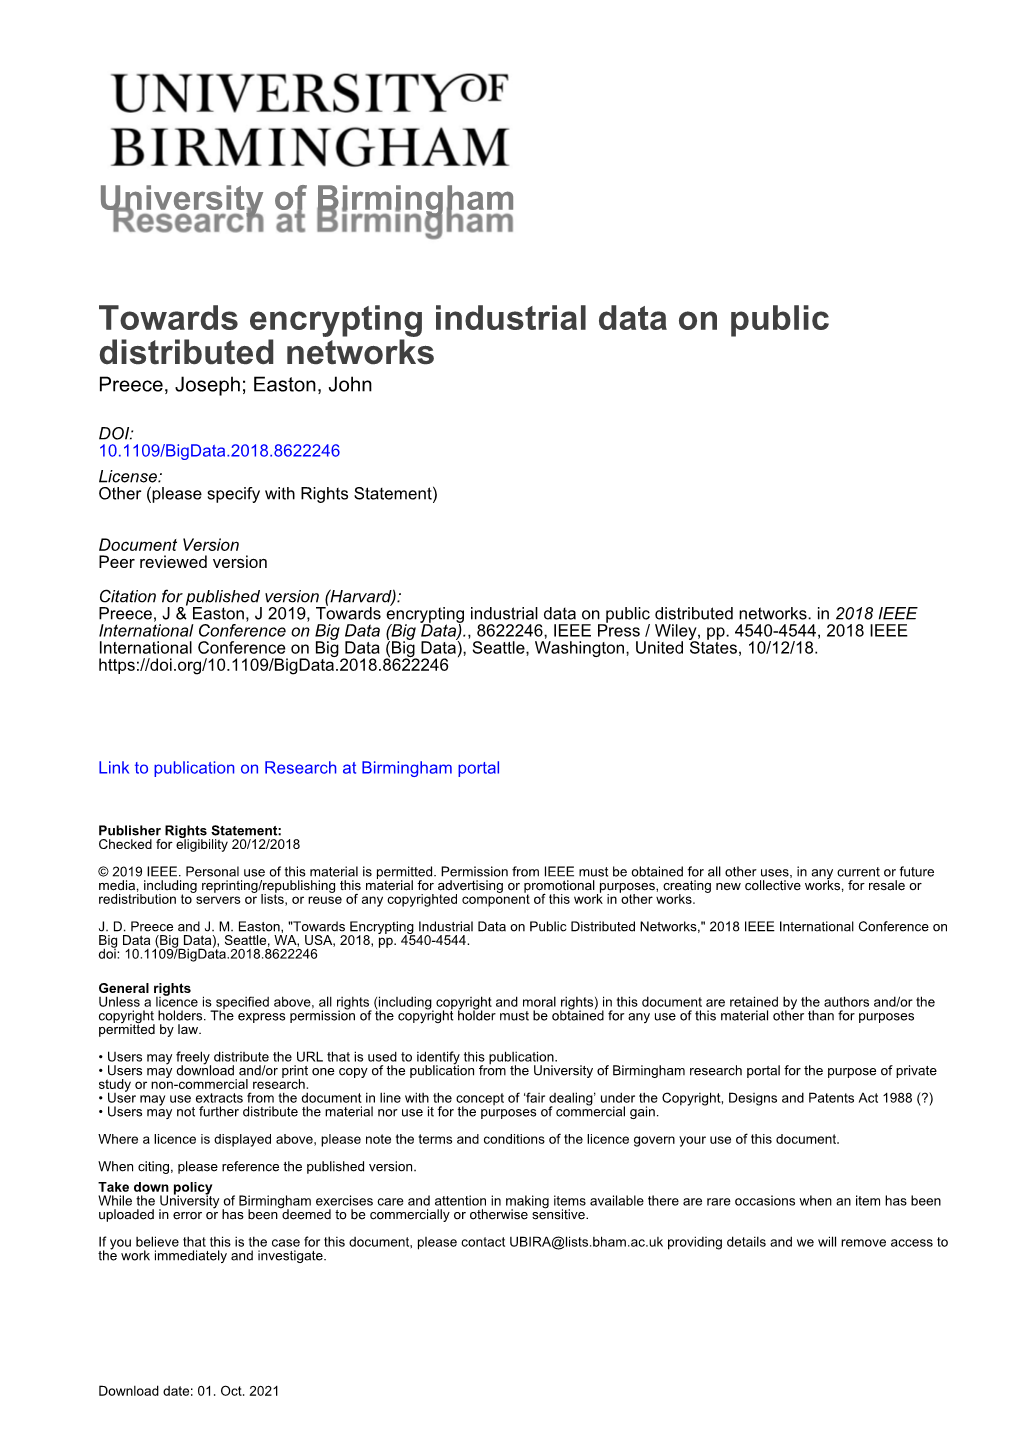 Towards Encrypting Industrial Data on Public Distributed Networks Preece, Joseph; Easton, John